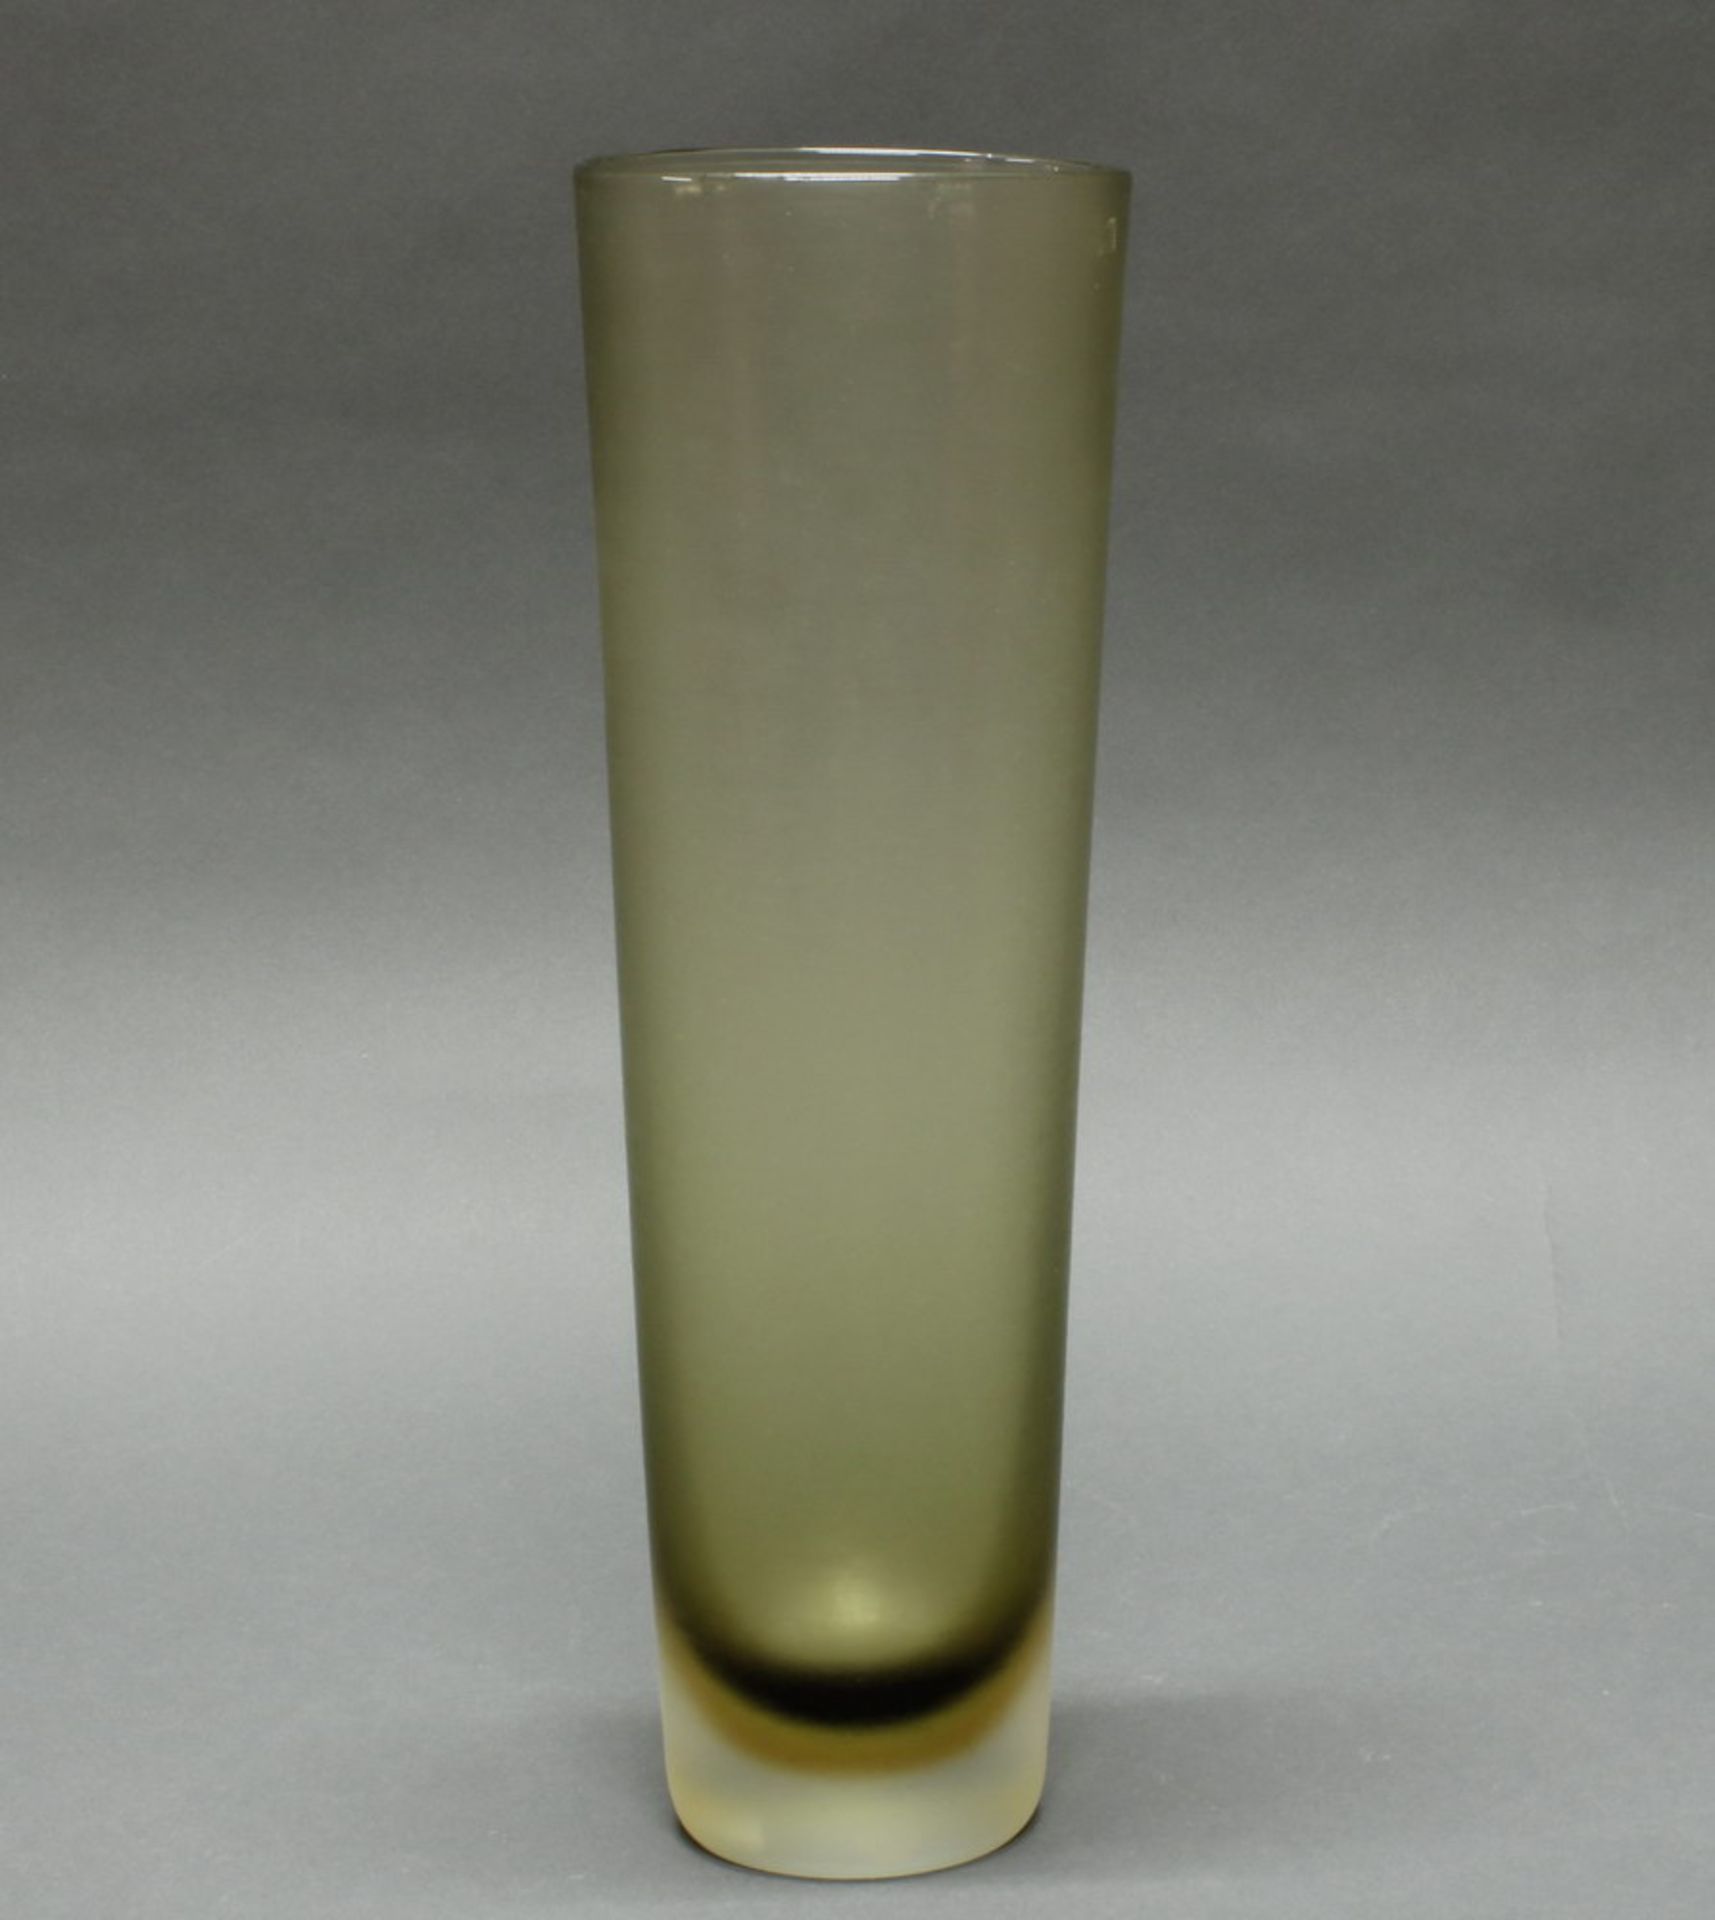 Vase, "Inciso", Paolo Venini, Murano, um 1956, Glas, hell-oliv bis bernsteingelbe Farbigkeit, - Image 2 of 2